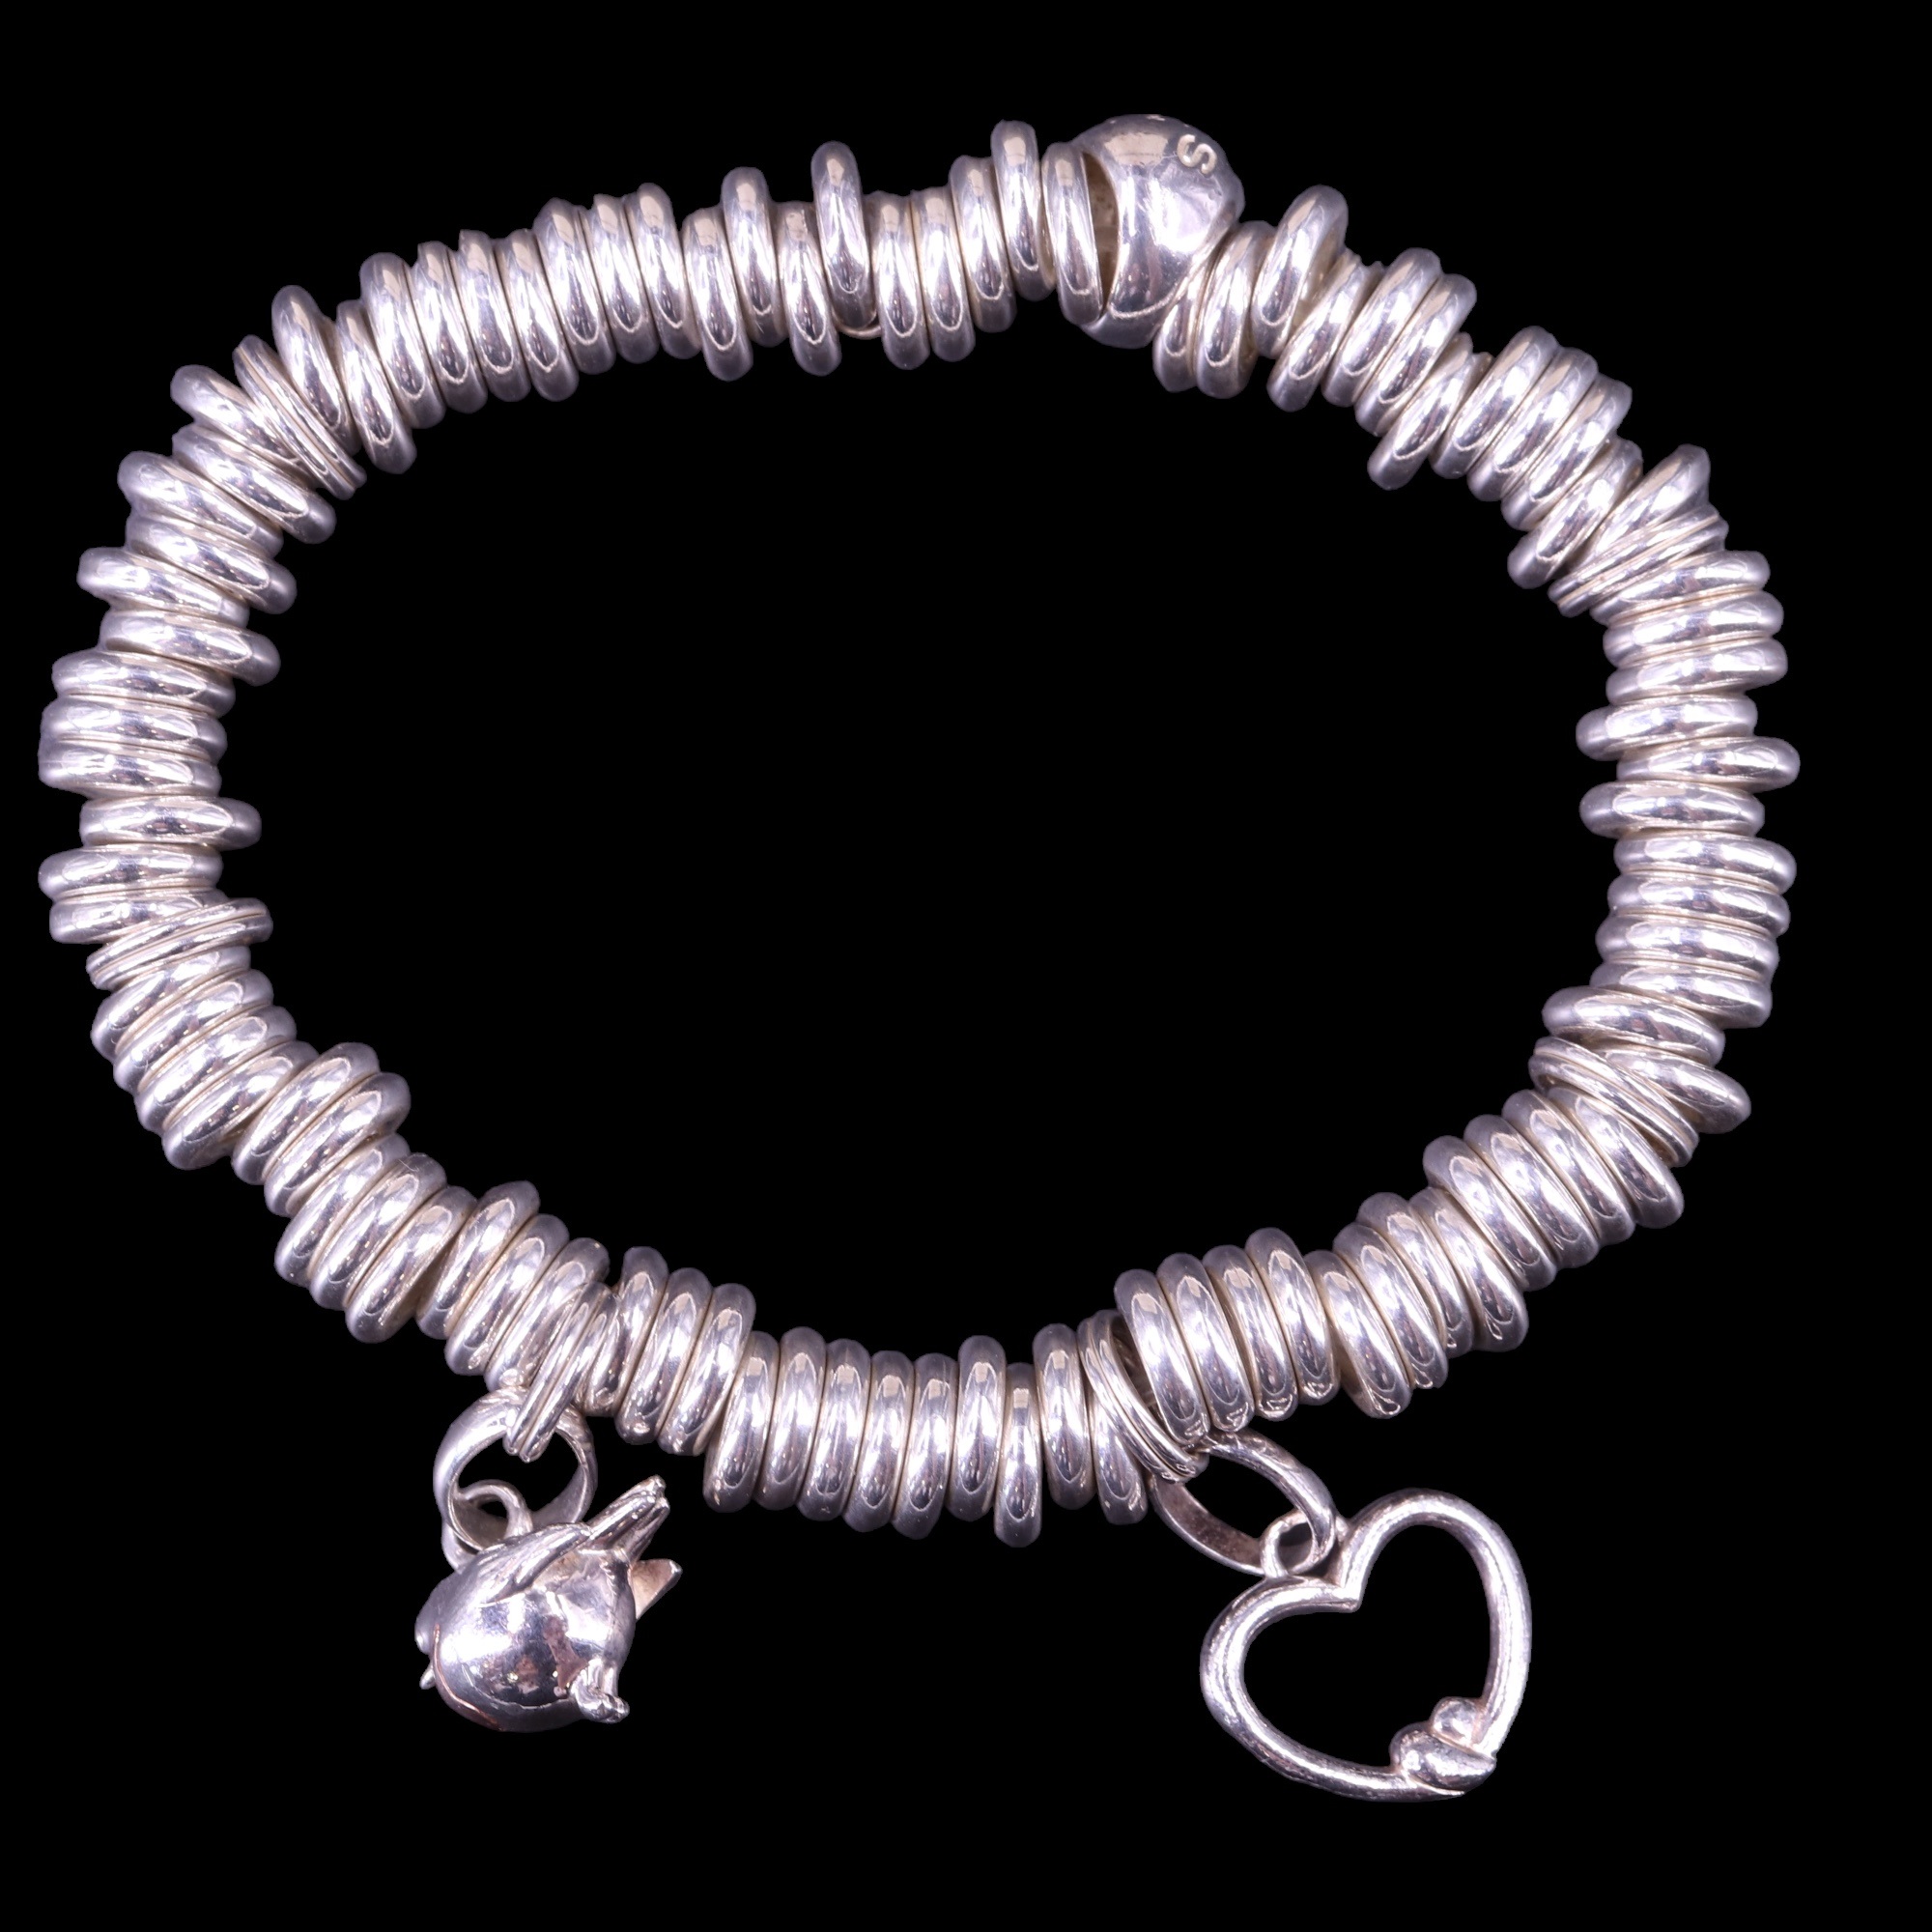 A Links of London white-metal charm bracelet, 60 g - Image 2 of 3